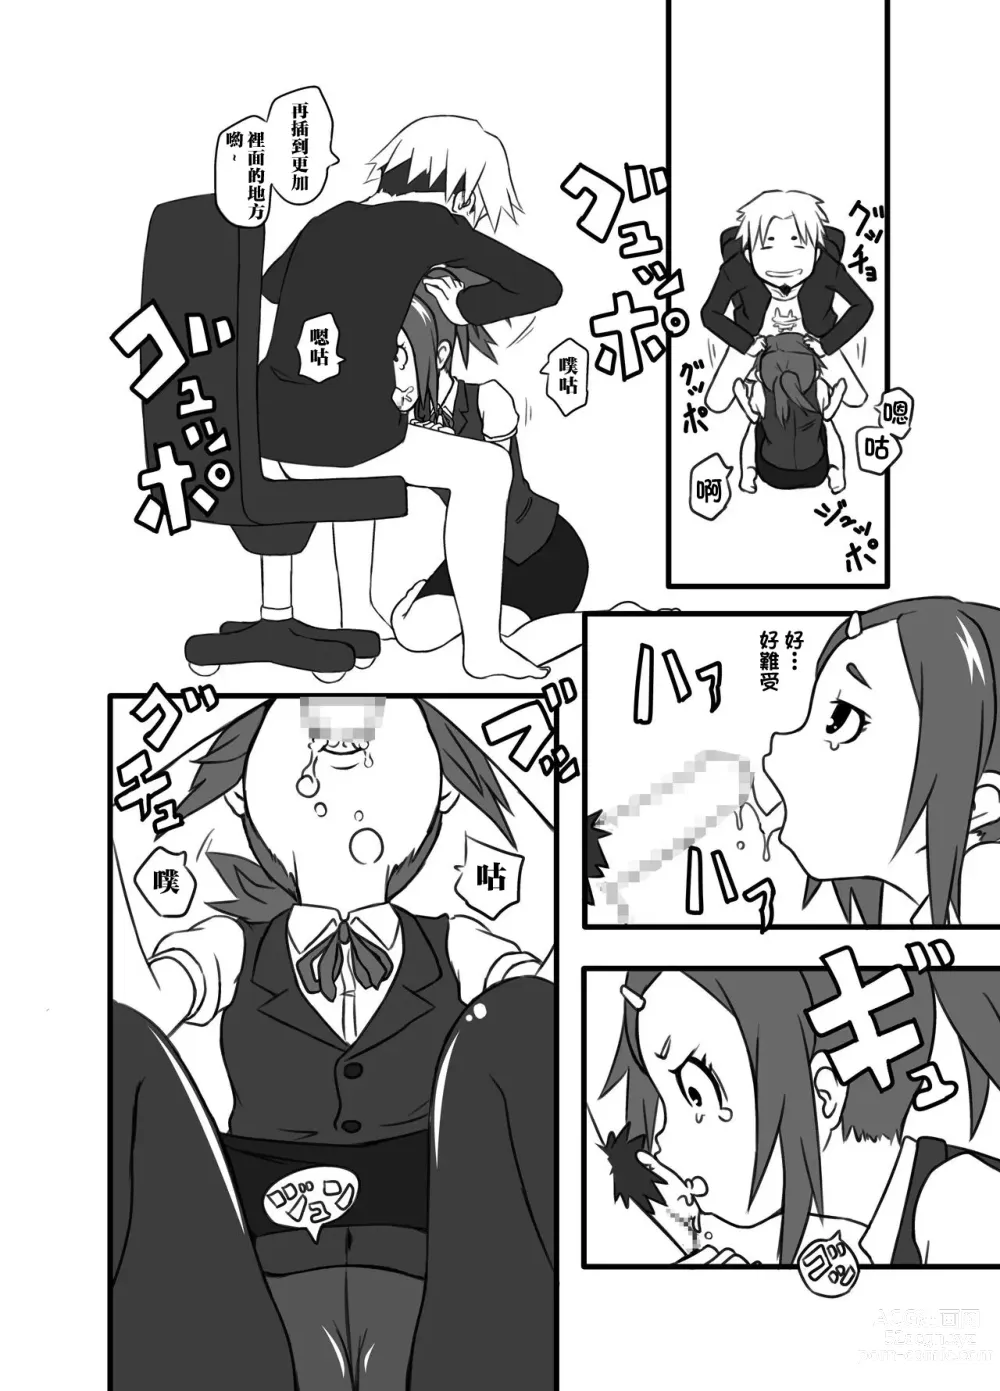 Page 6 of doujinshi 今天、要用嘴巴來侍奉您嗎?